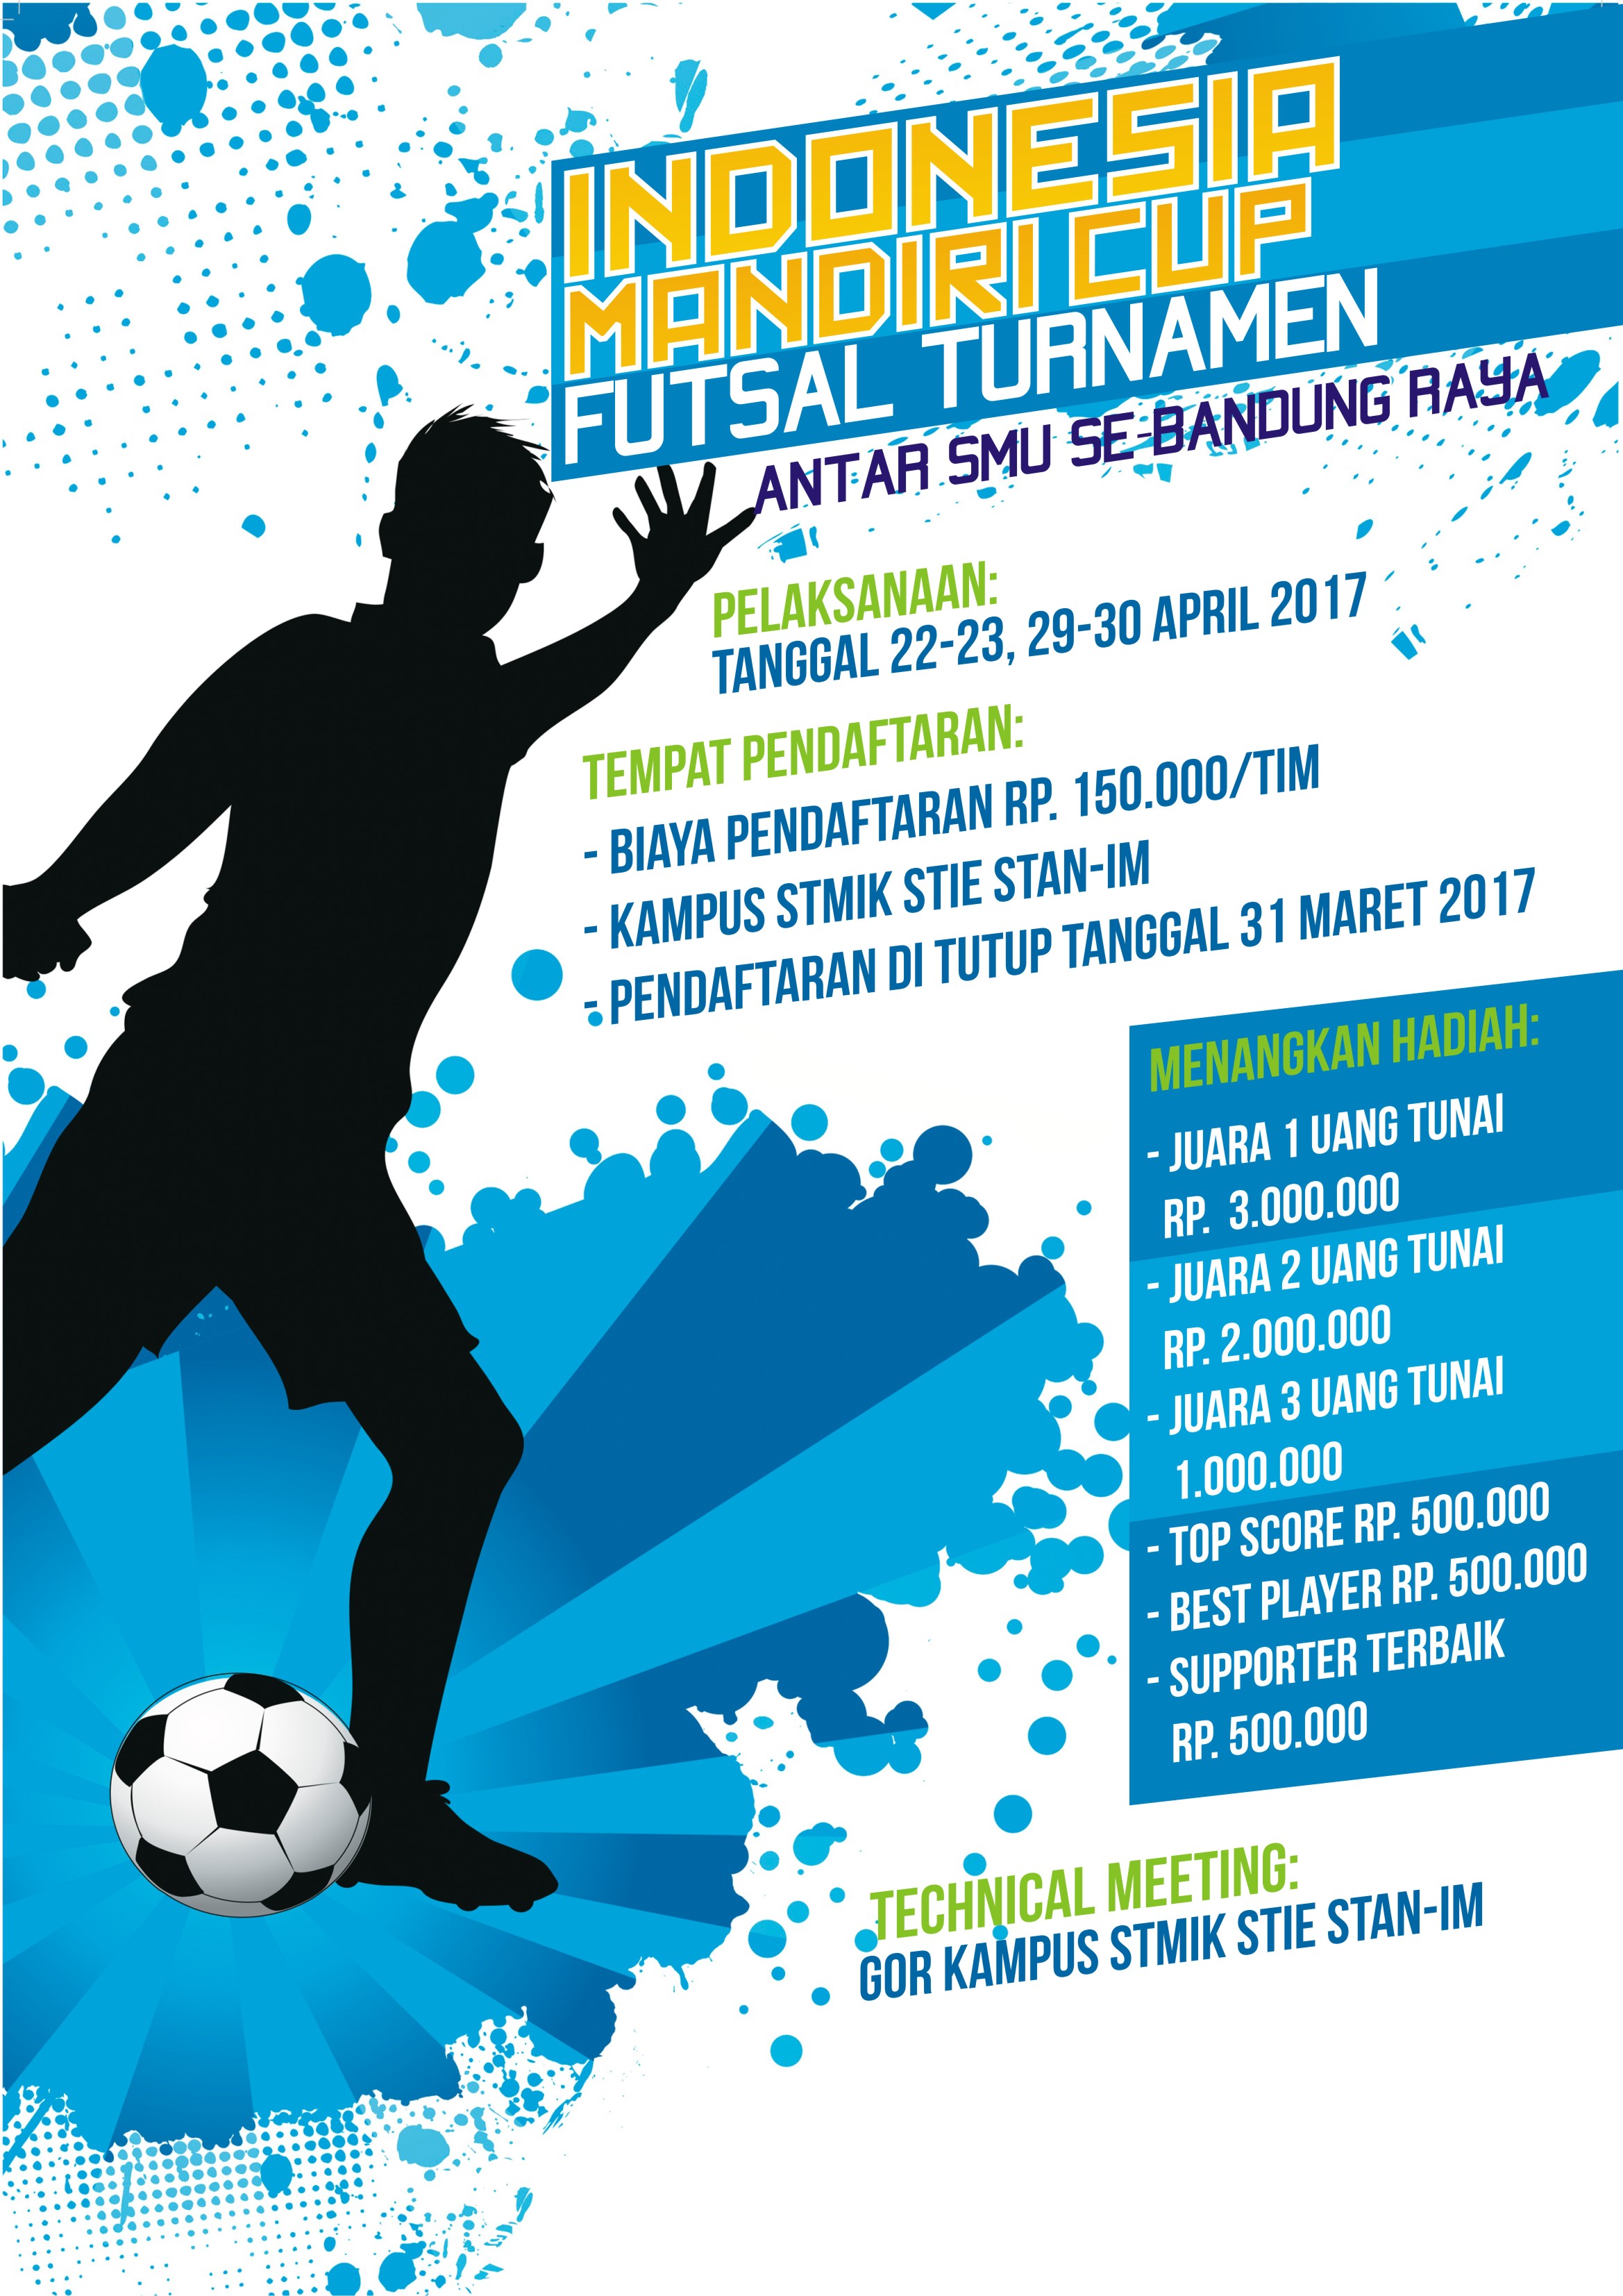 Indonesia Mandiri Cup Futsal Turnamen Antar SMU se Bandung Raya